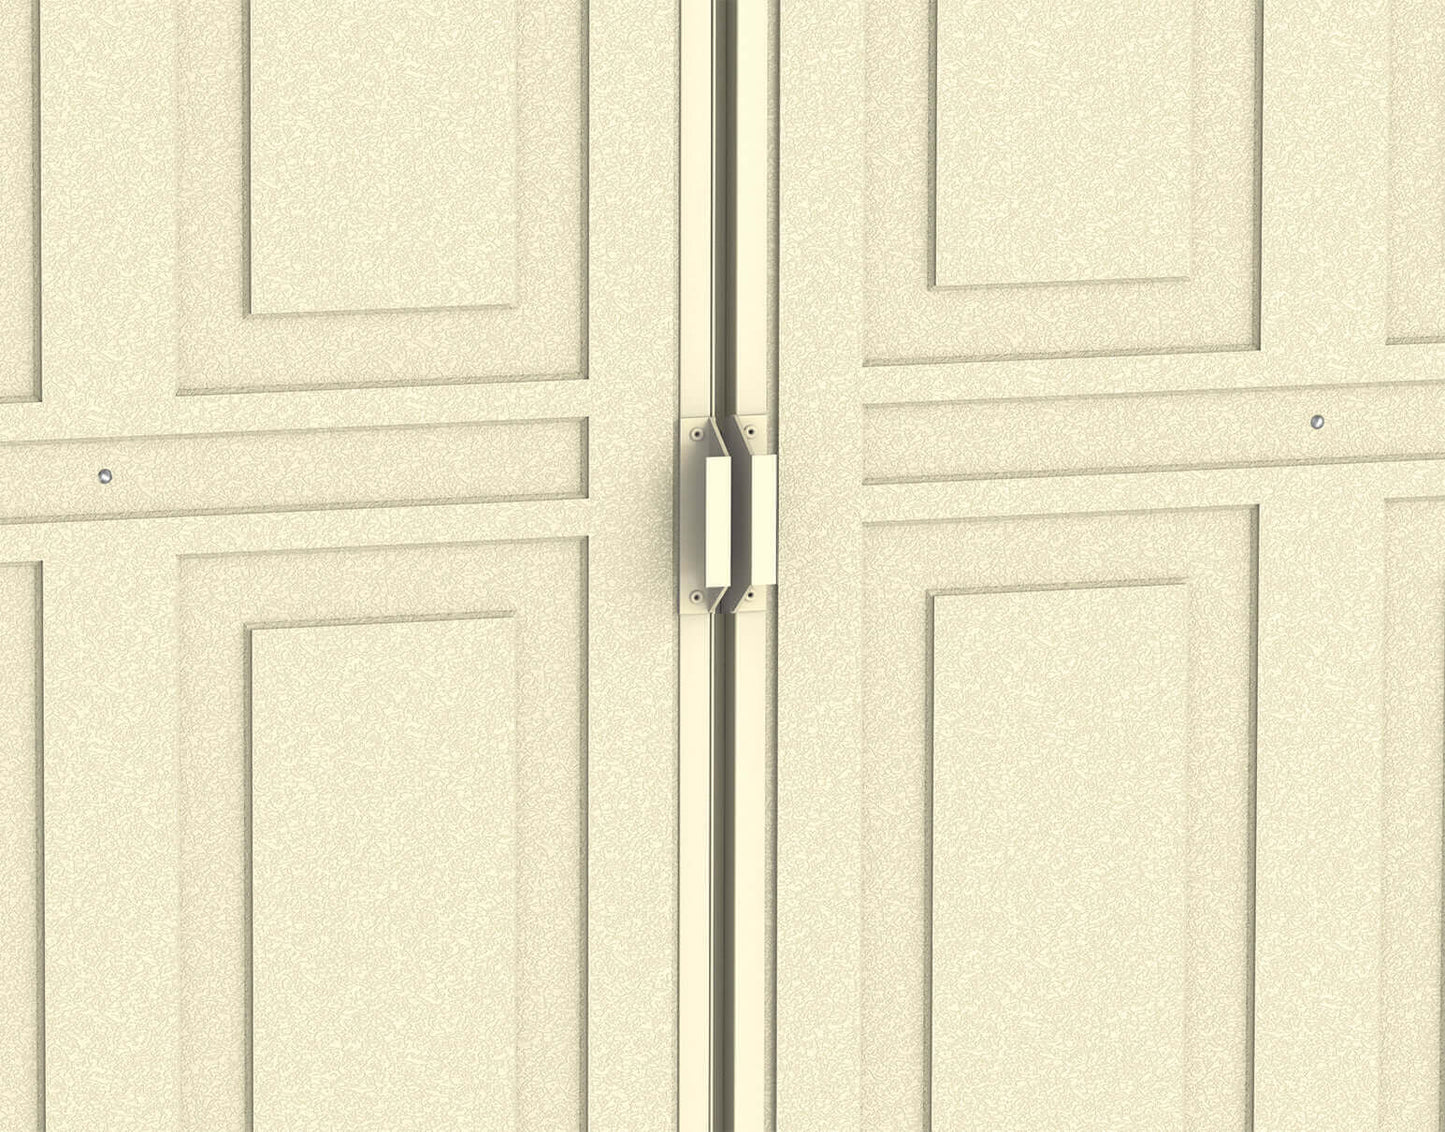 Duramax 10.5' x 5.0' Woodbridge with Foundation 00283 Front view of doors